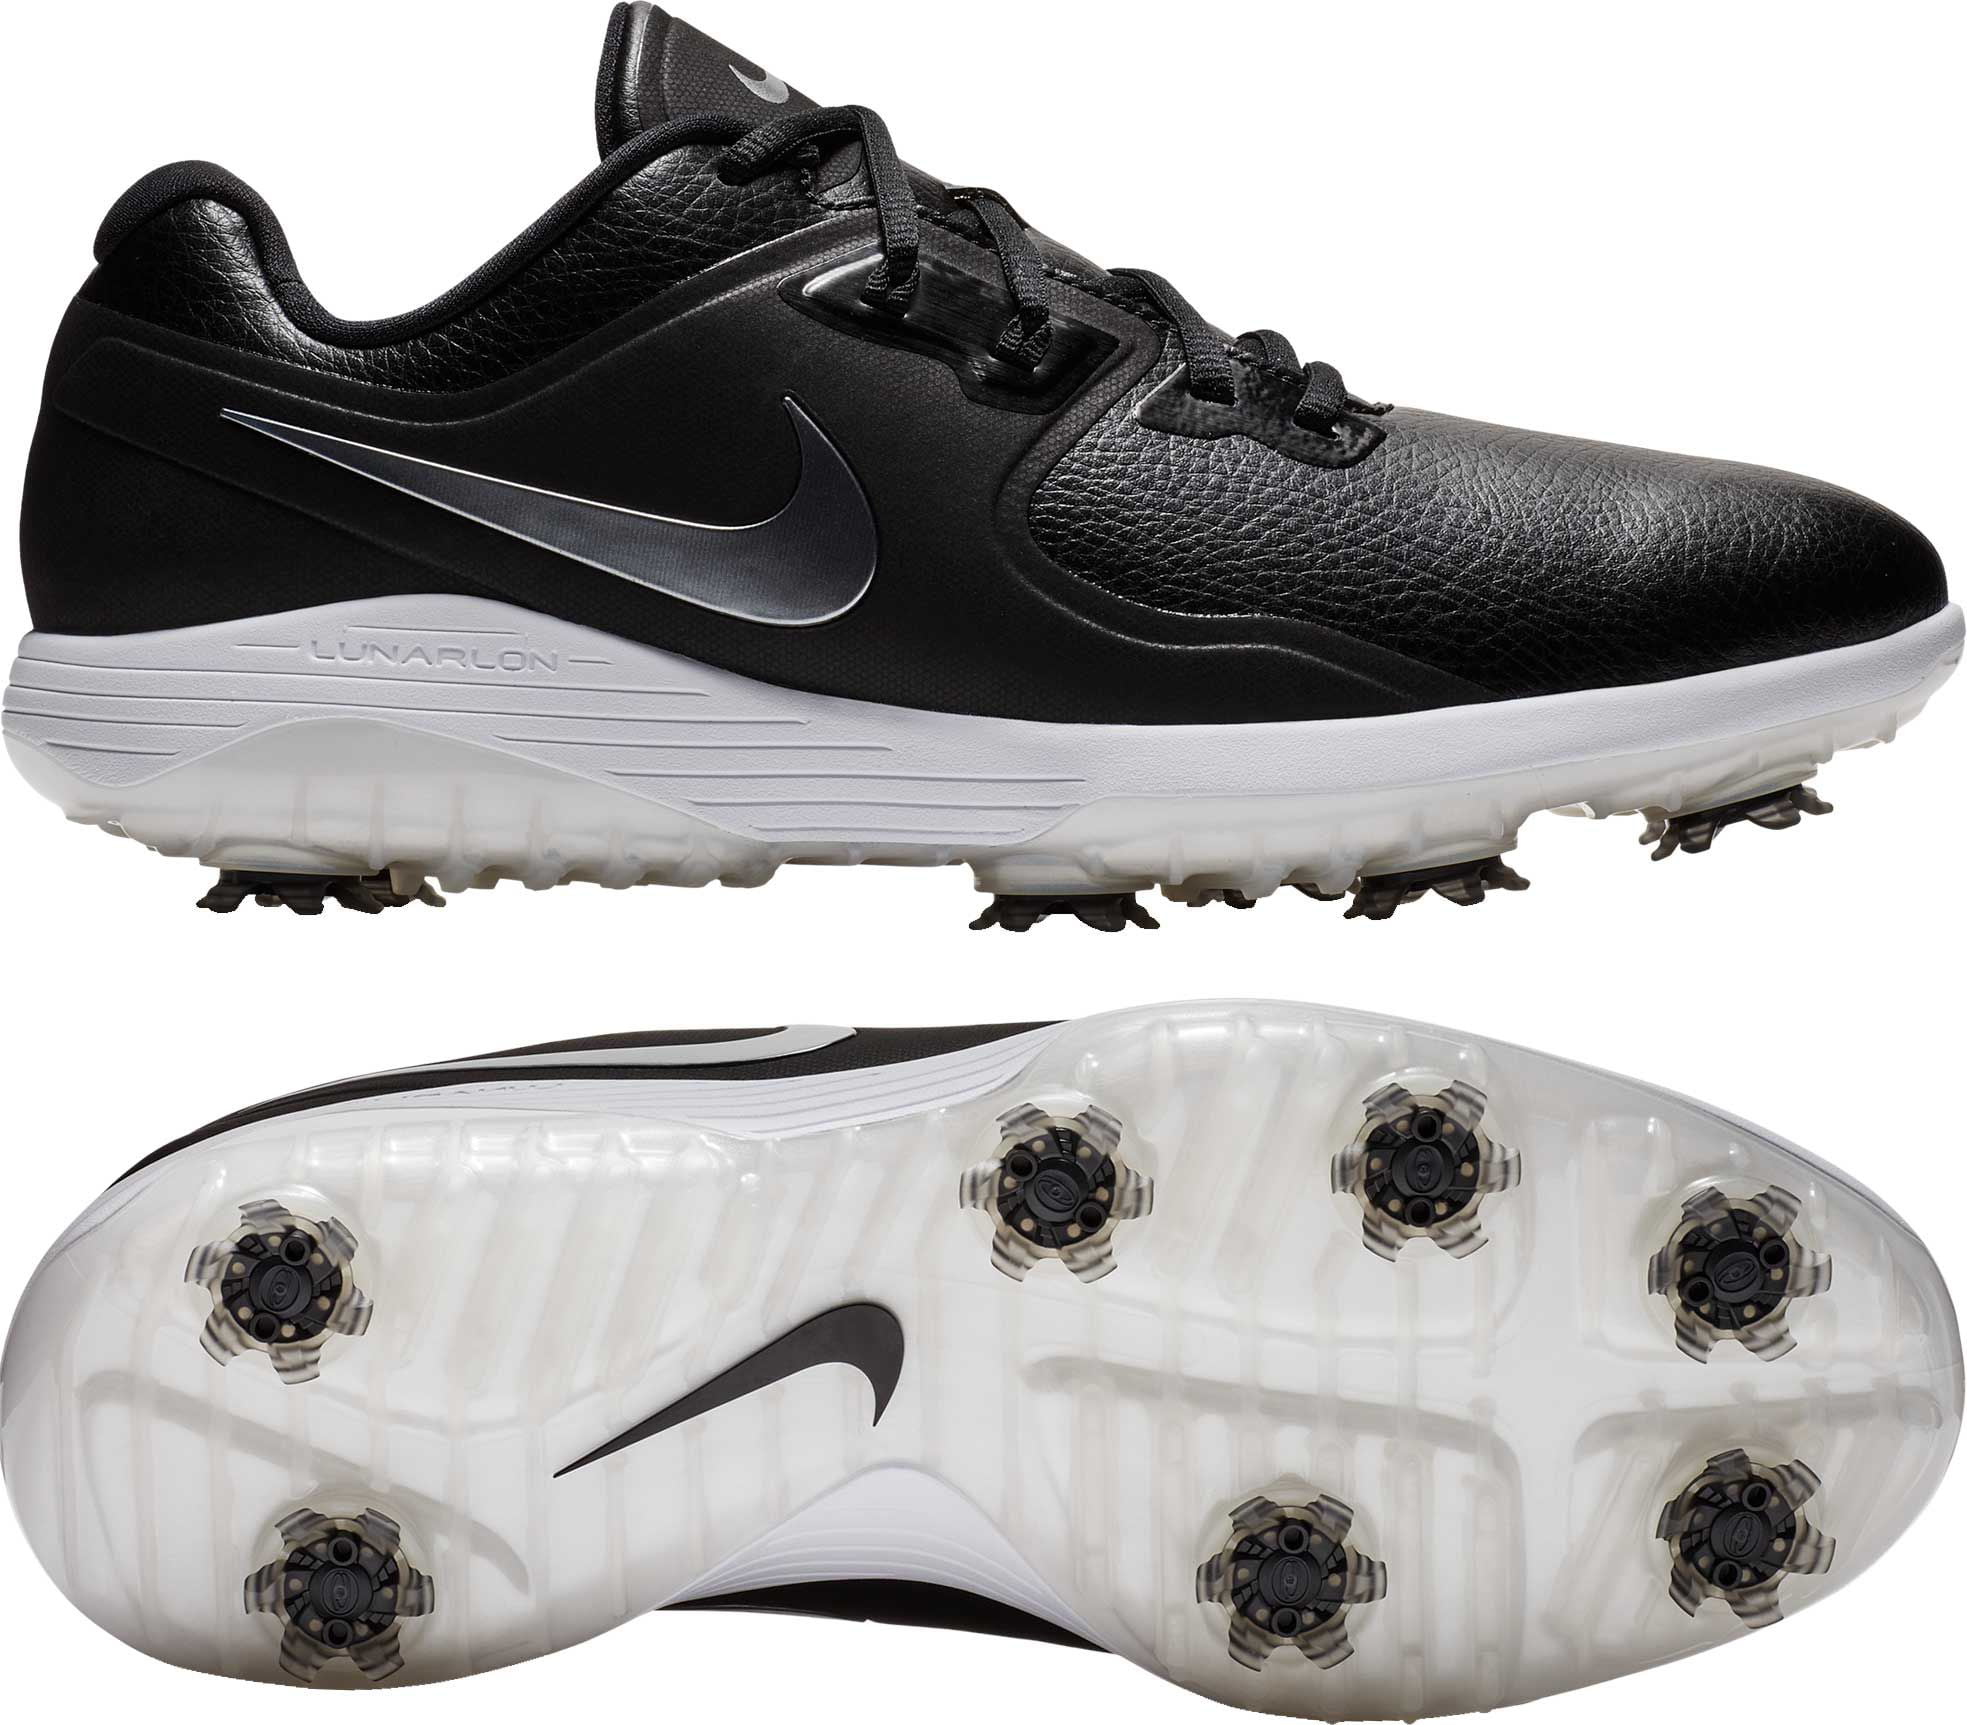 Nike - Nike Men's Vapor Pro Golf Shoes - Walmart.com ...